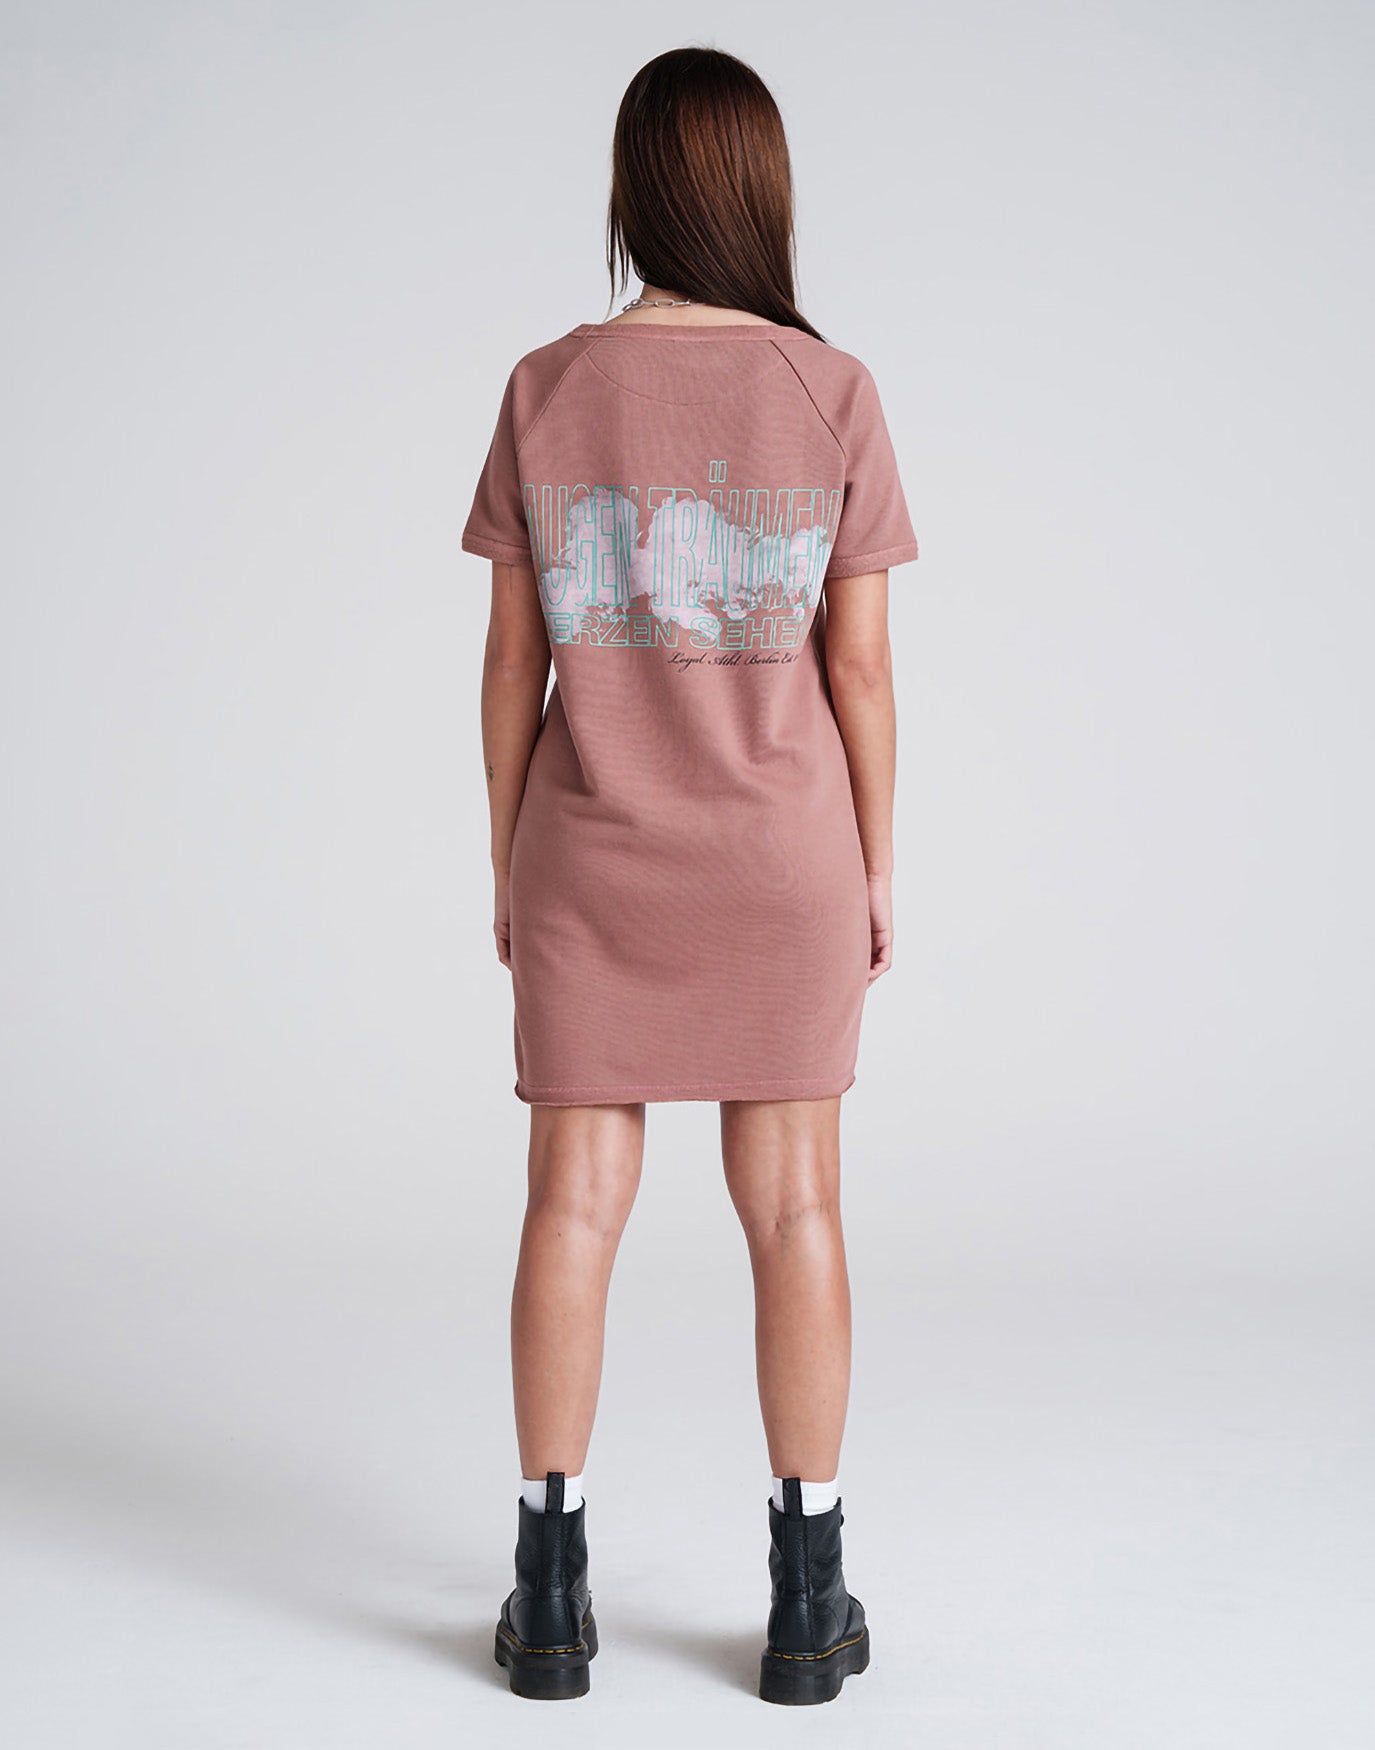 HSED Cloud Shirt Dress